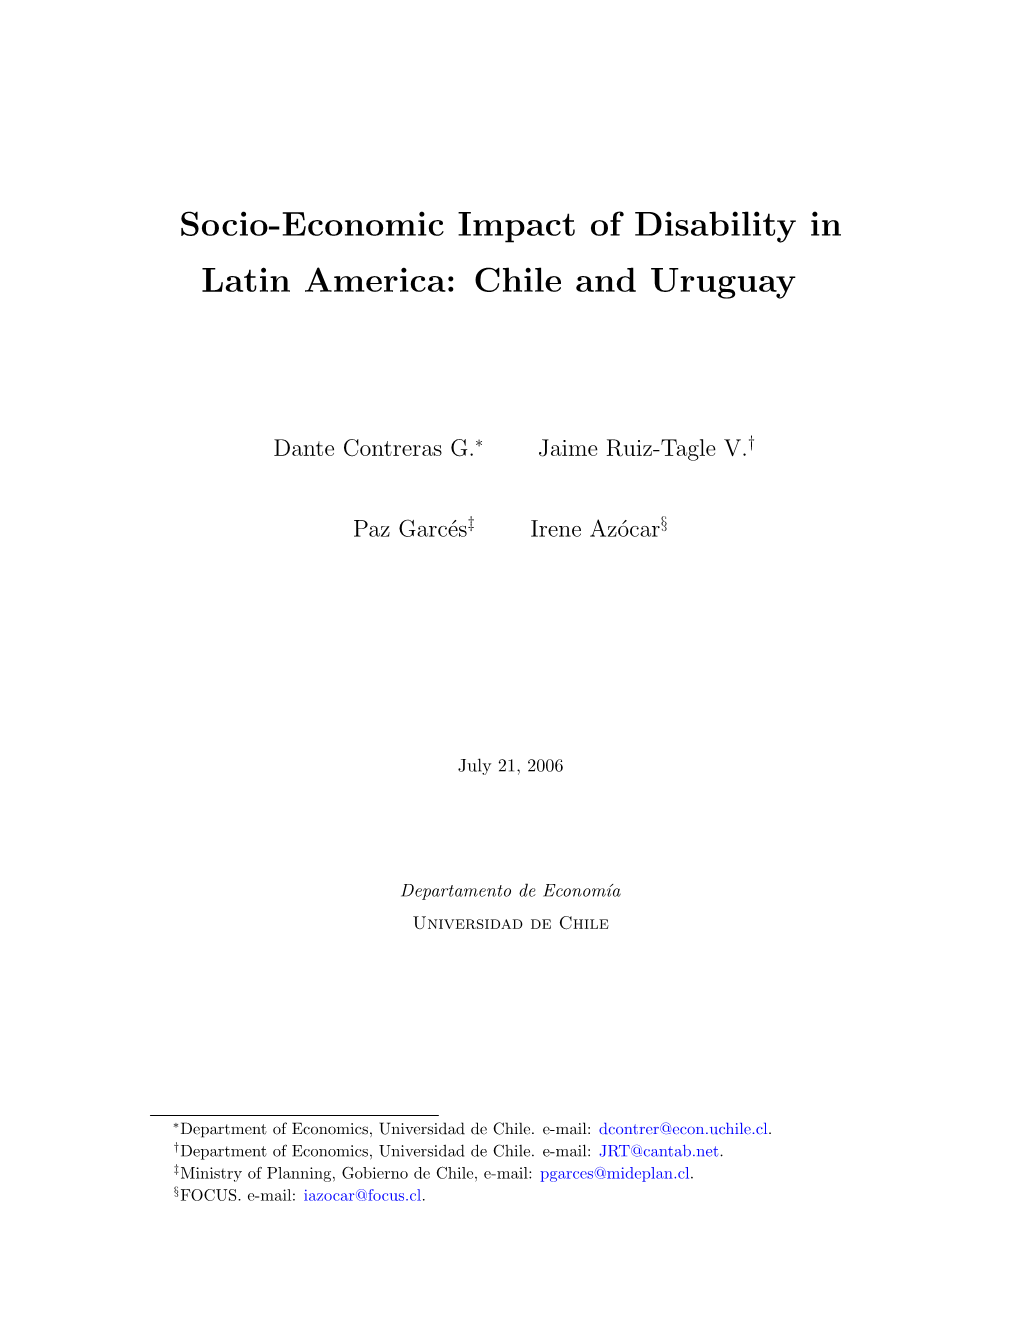 Socio-Economic Impact of Disability in Latin America: Chile and Uruguay